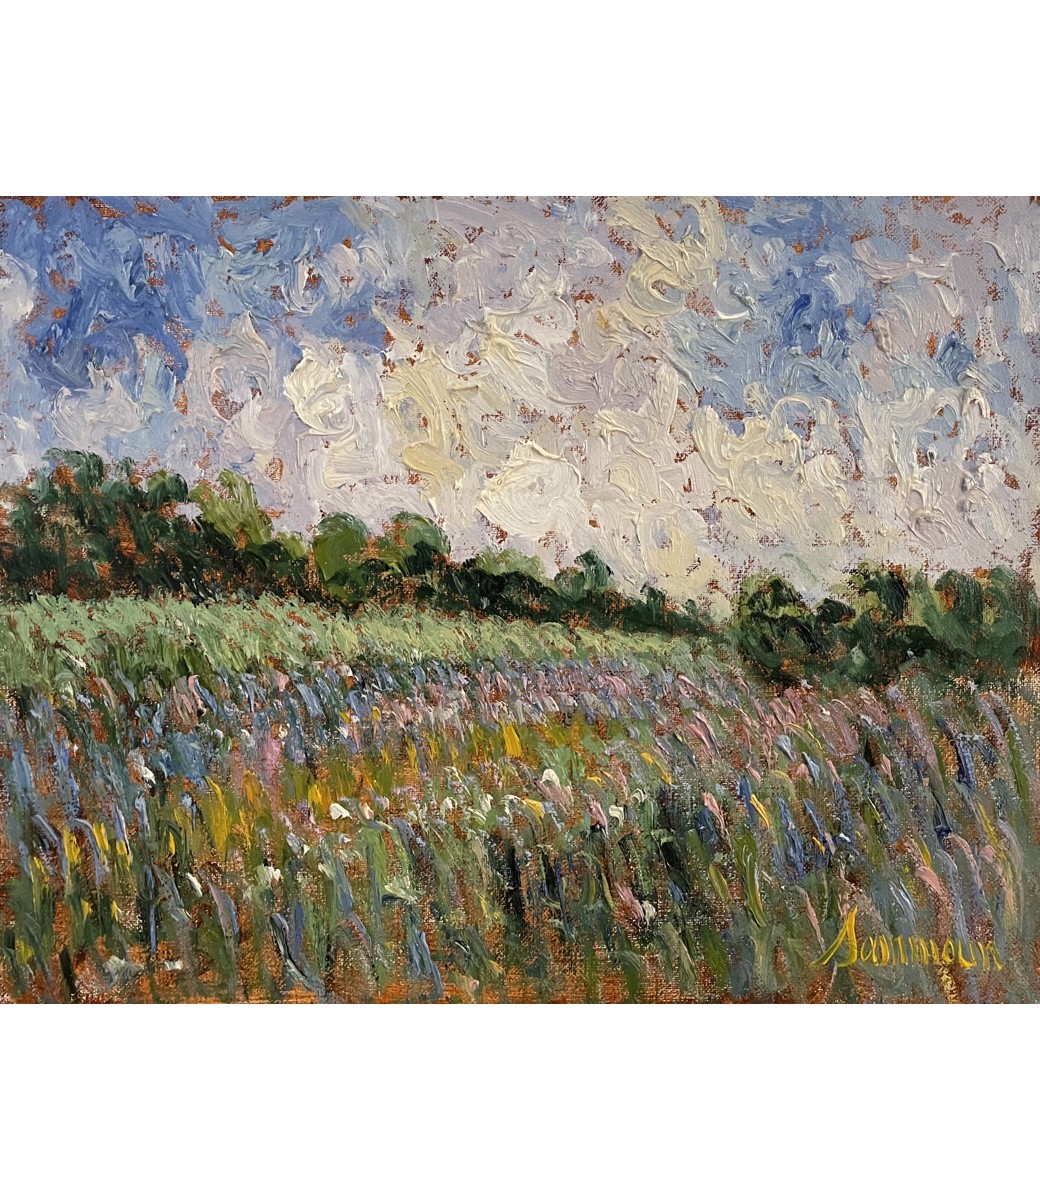 SAMIR SAMMOUN - Green Wheat Field and Wild Lavender - Oil on Canvas - 16 x 20 inches